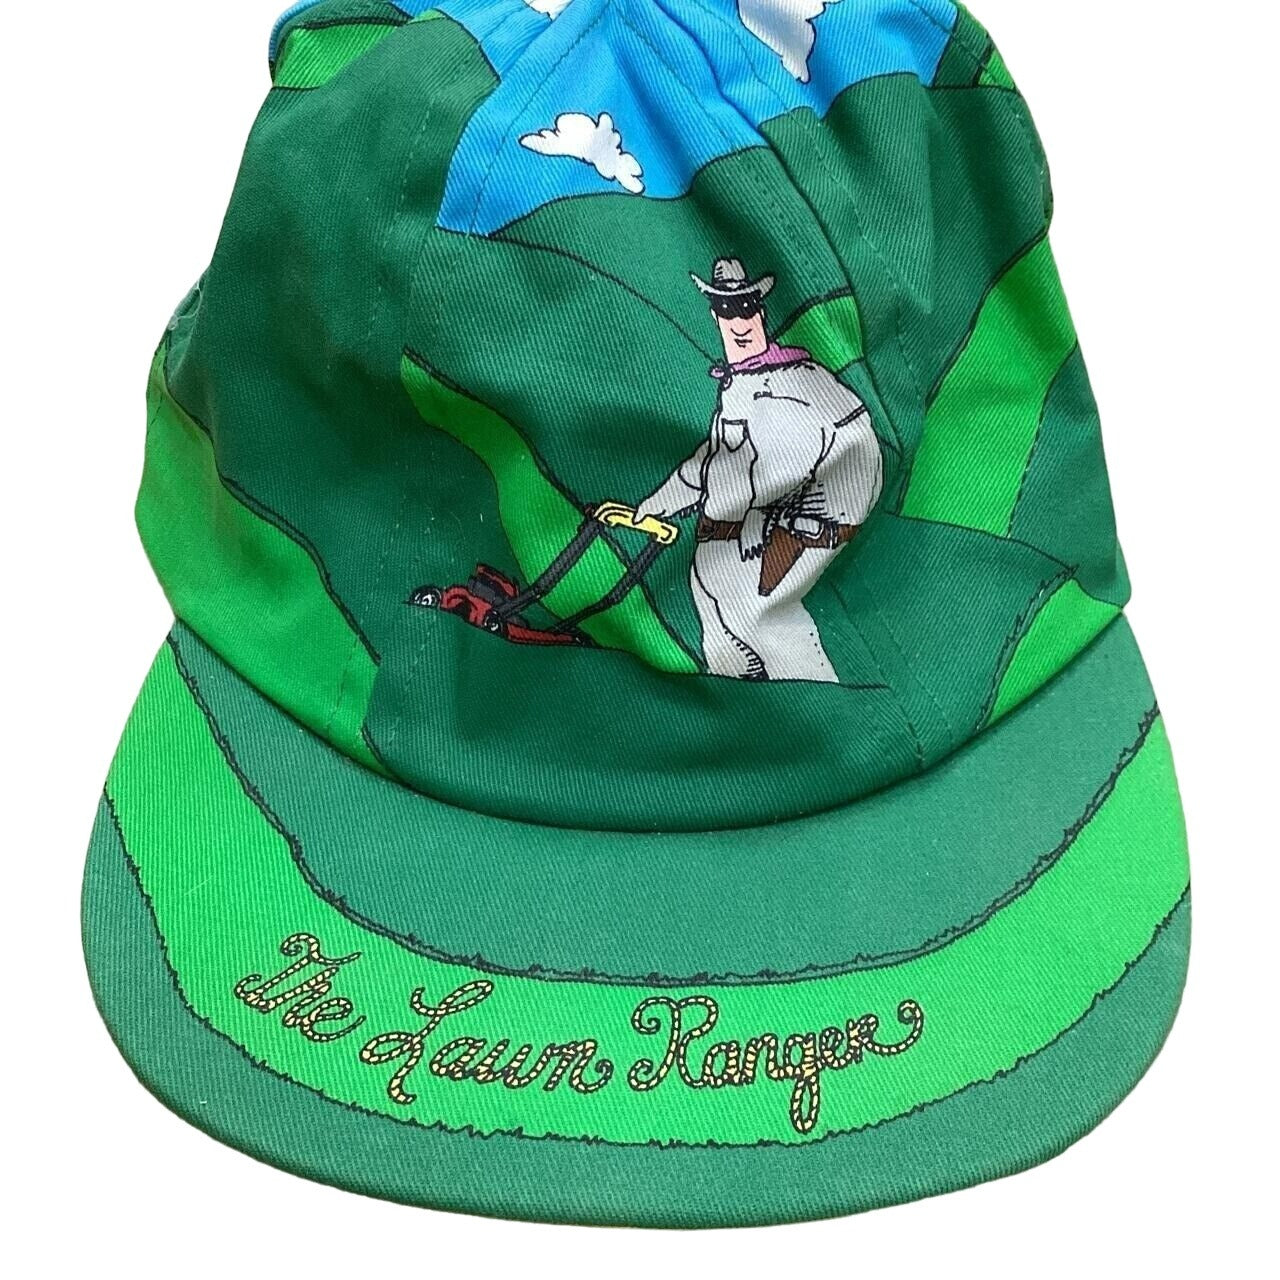 The Lawn Ranger Hat - 922